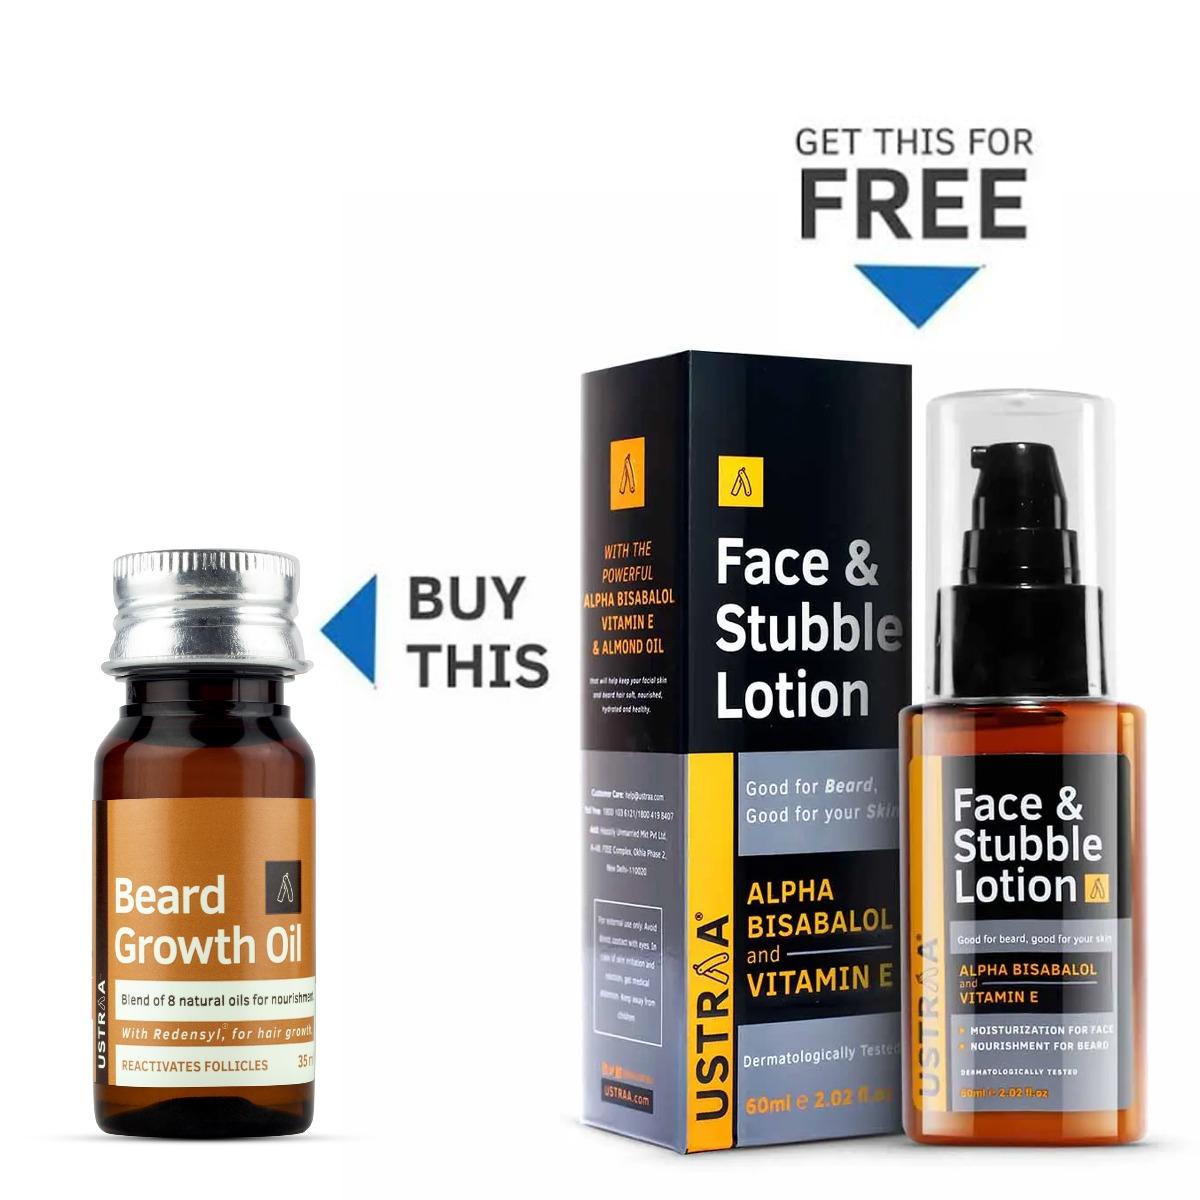 Ustraa Beard Growth Oil & Get Face & Stubble Lotion Free